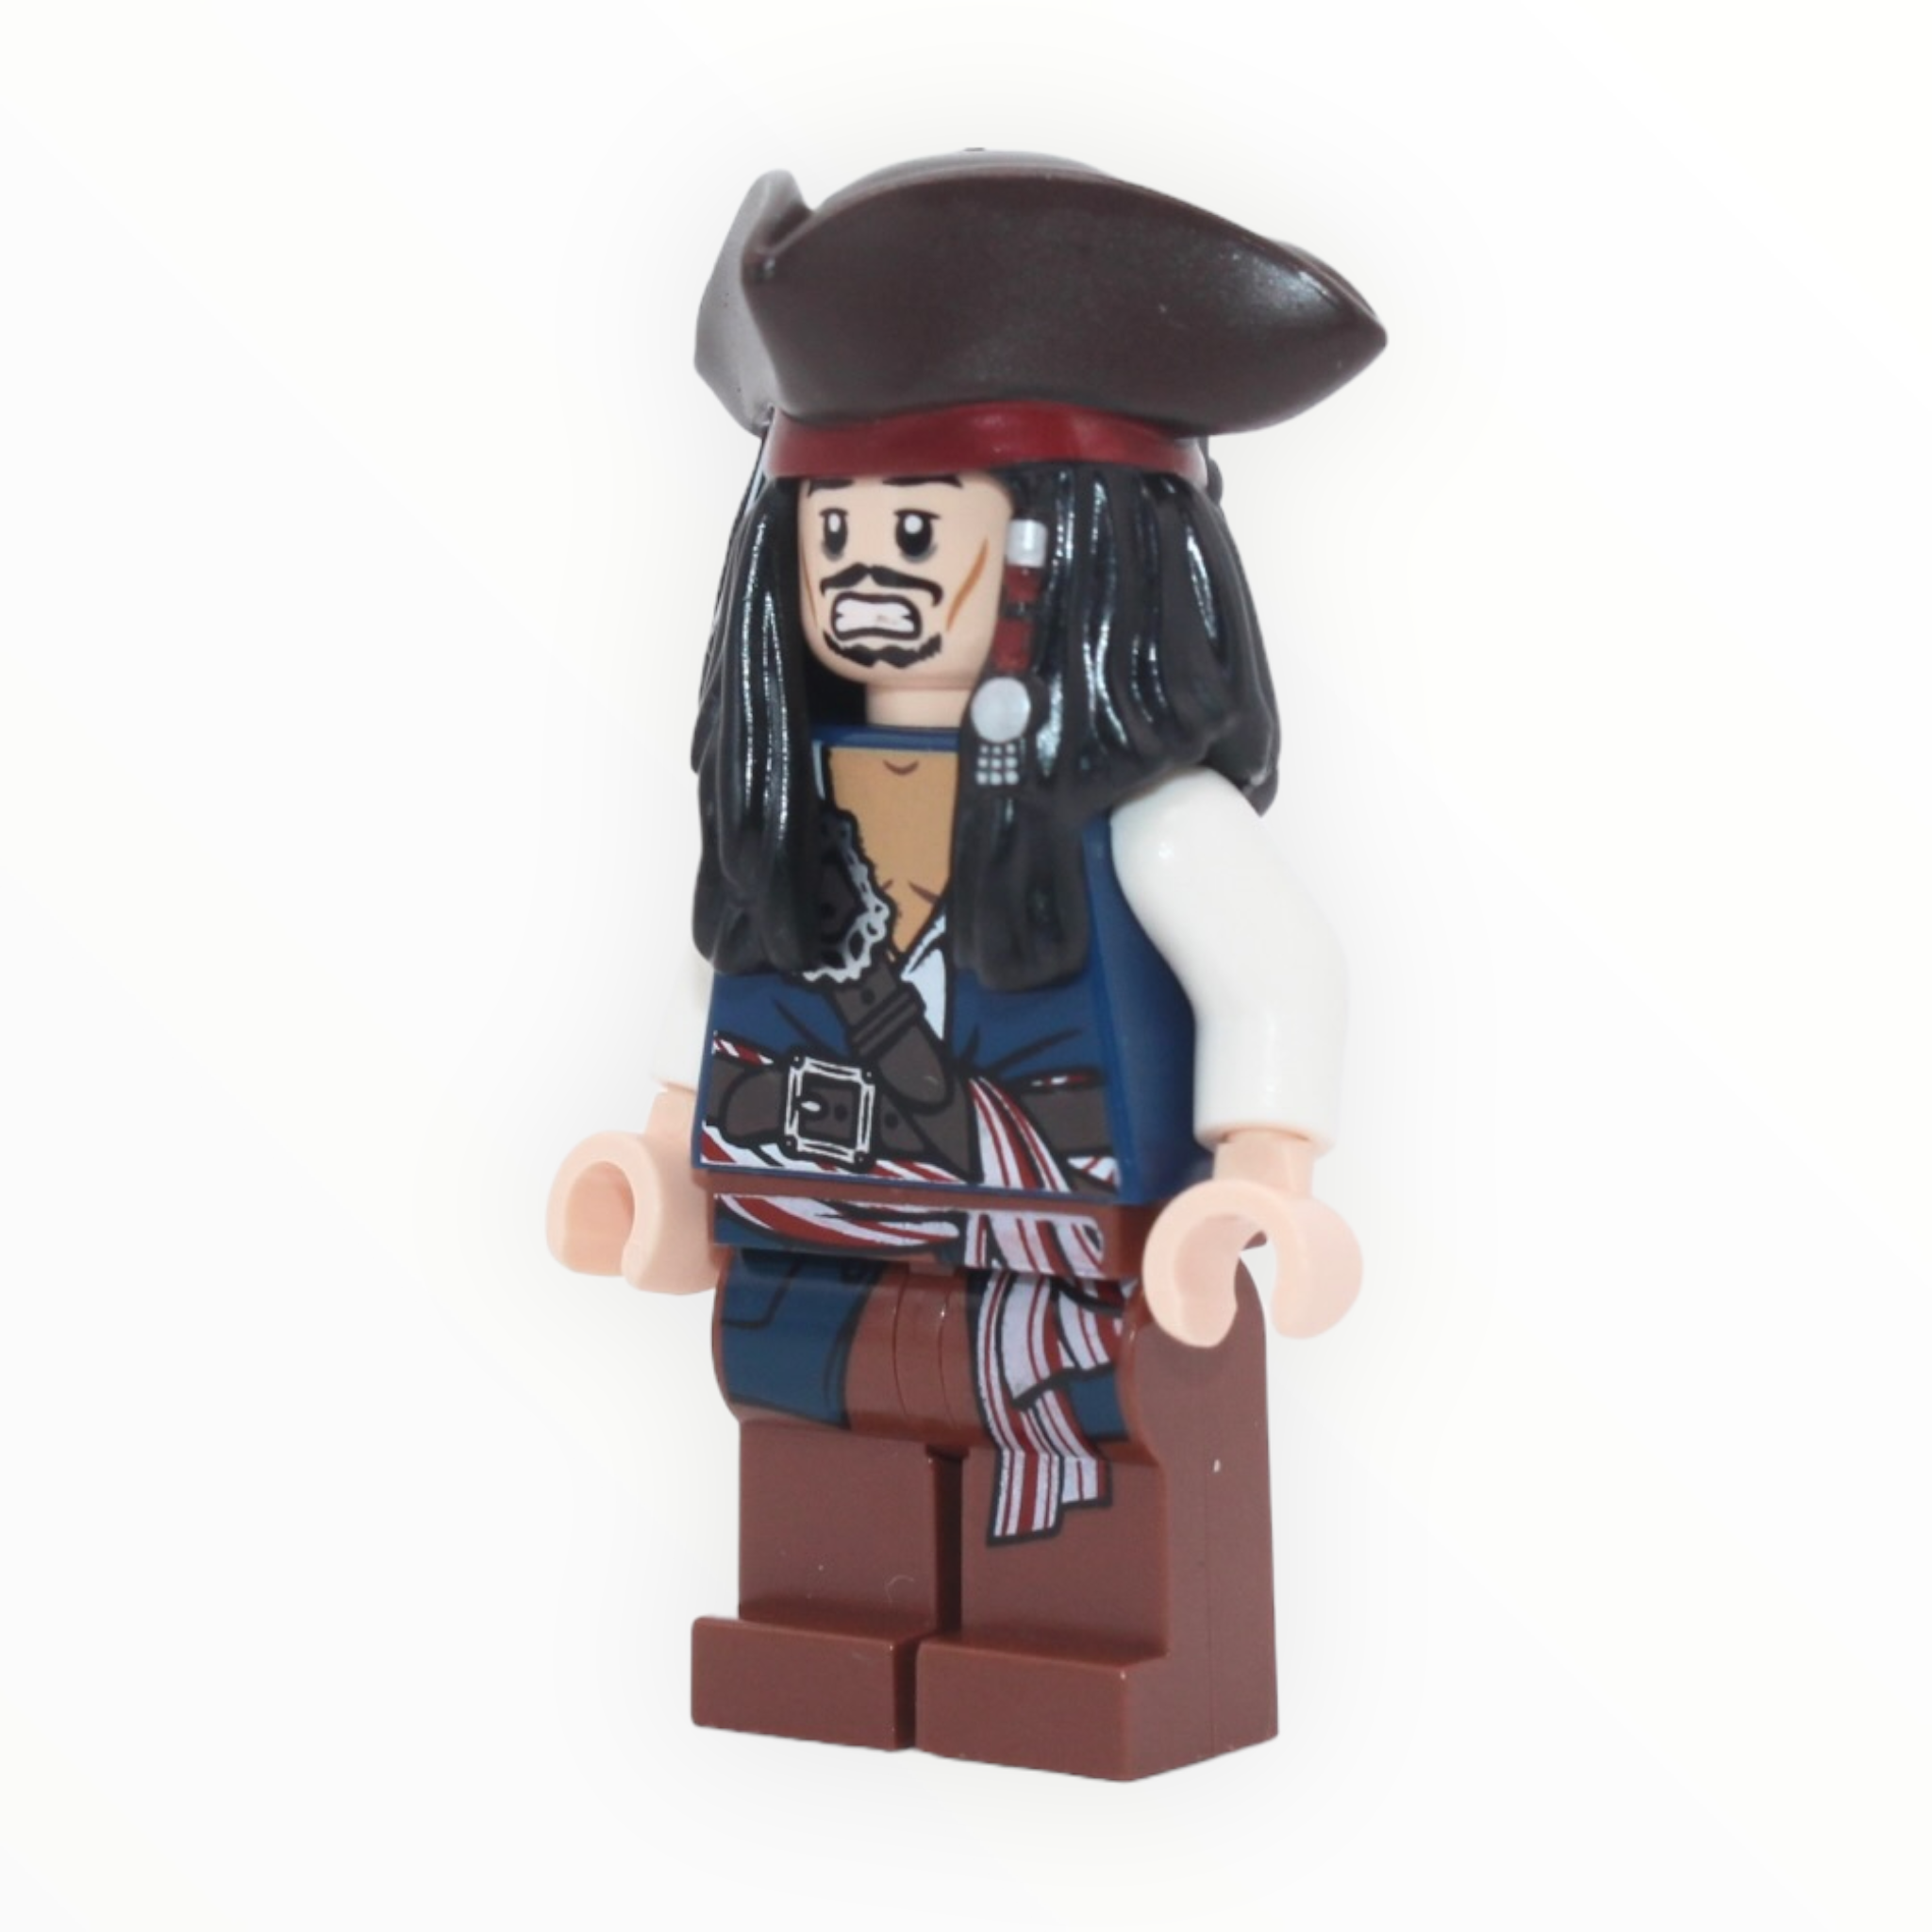 Captain Jack Sparrow (tricorne hat, smile / scared)